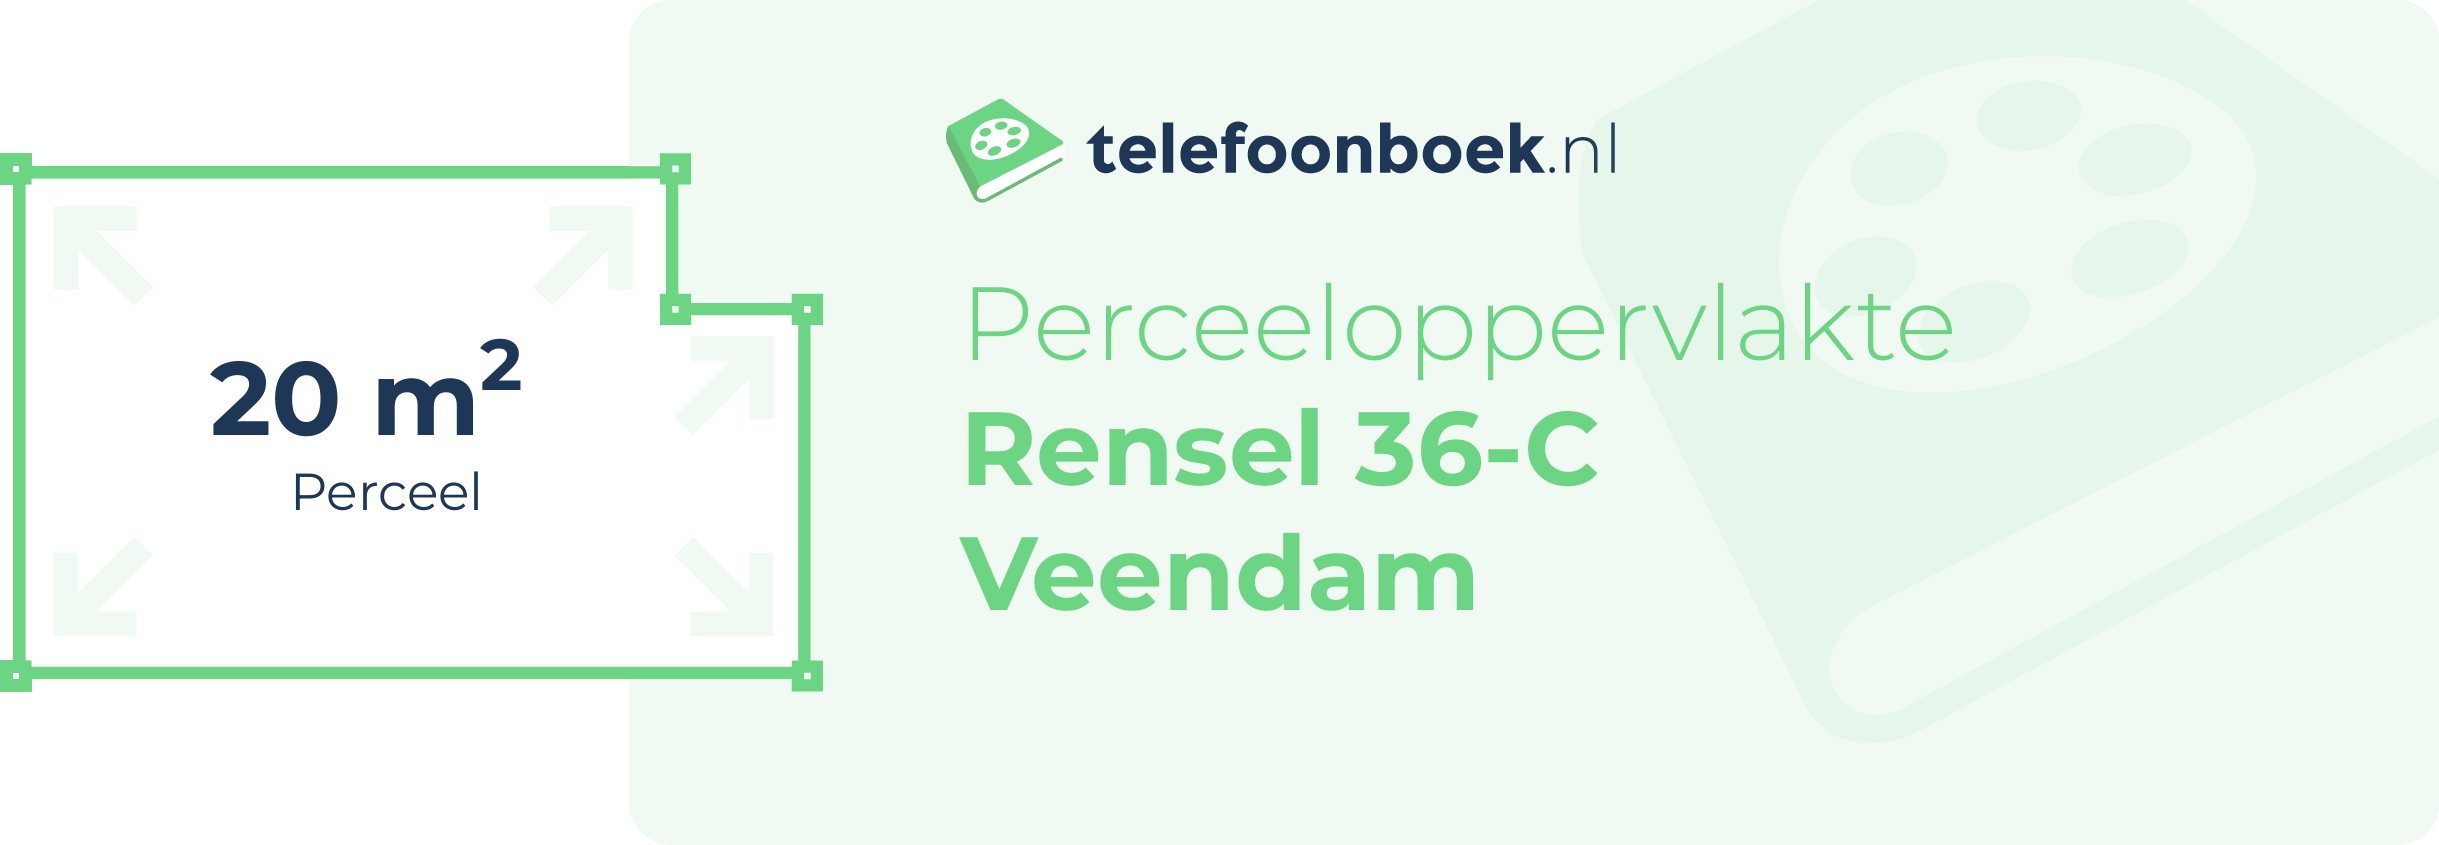 Perceeloppervlakte Rensel 36-C Veendam